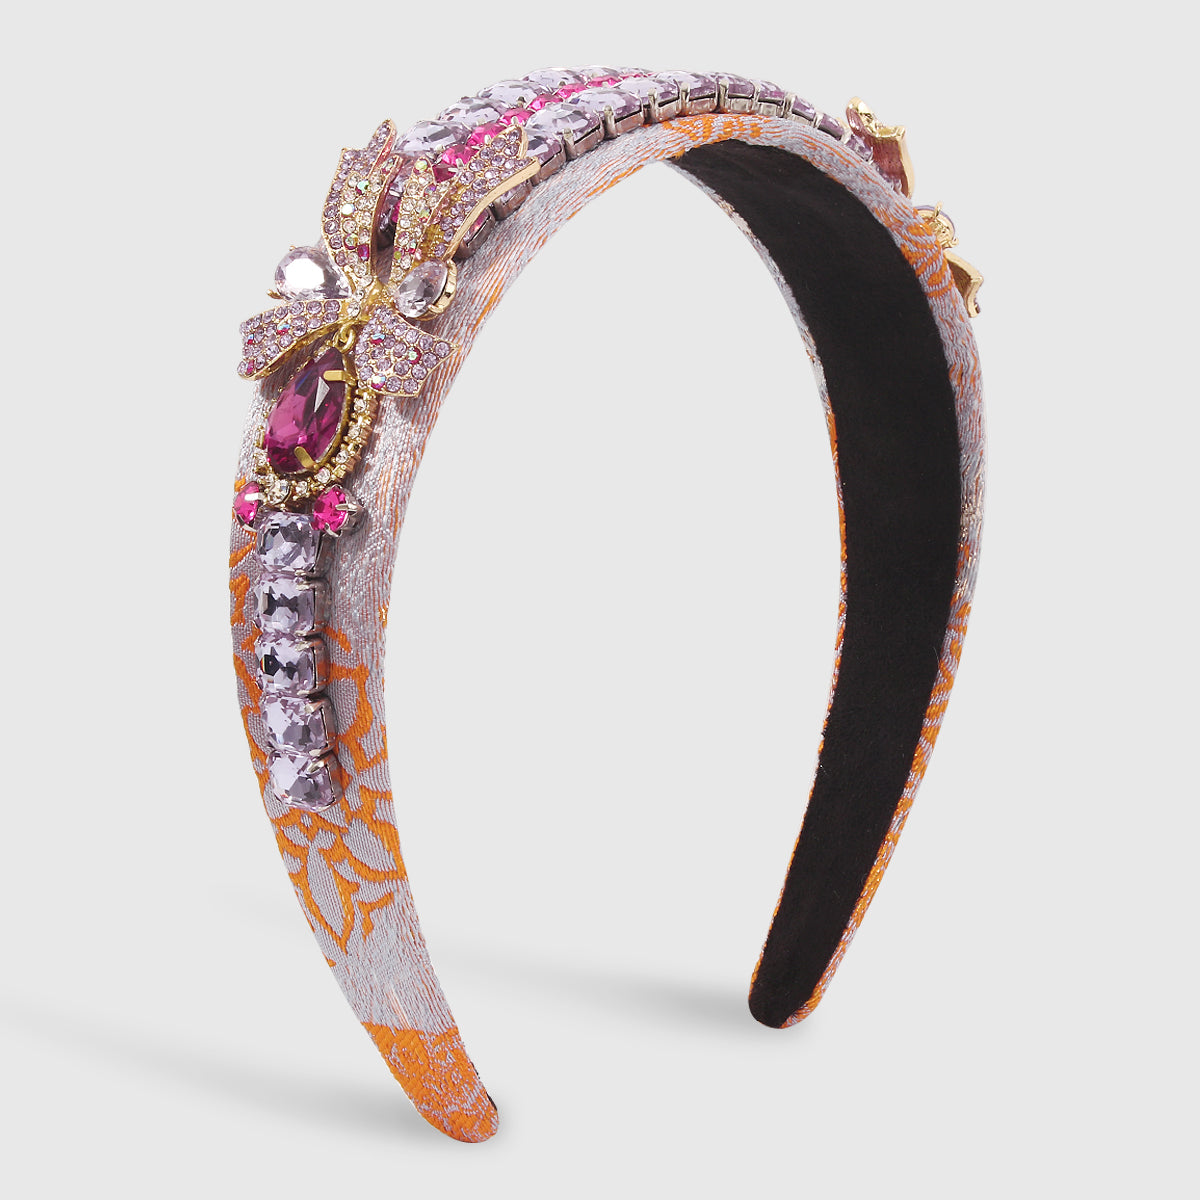 Luxury Baroque Rhinestone Side Bowknot Headband medyjewelry